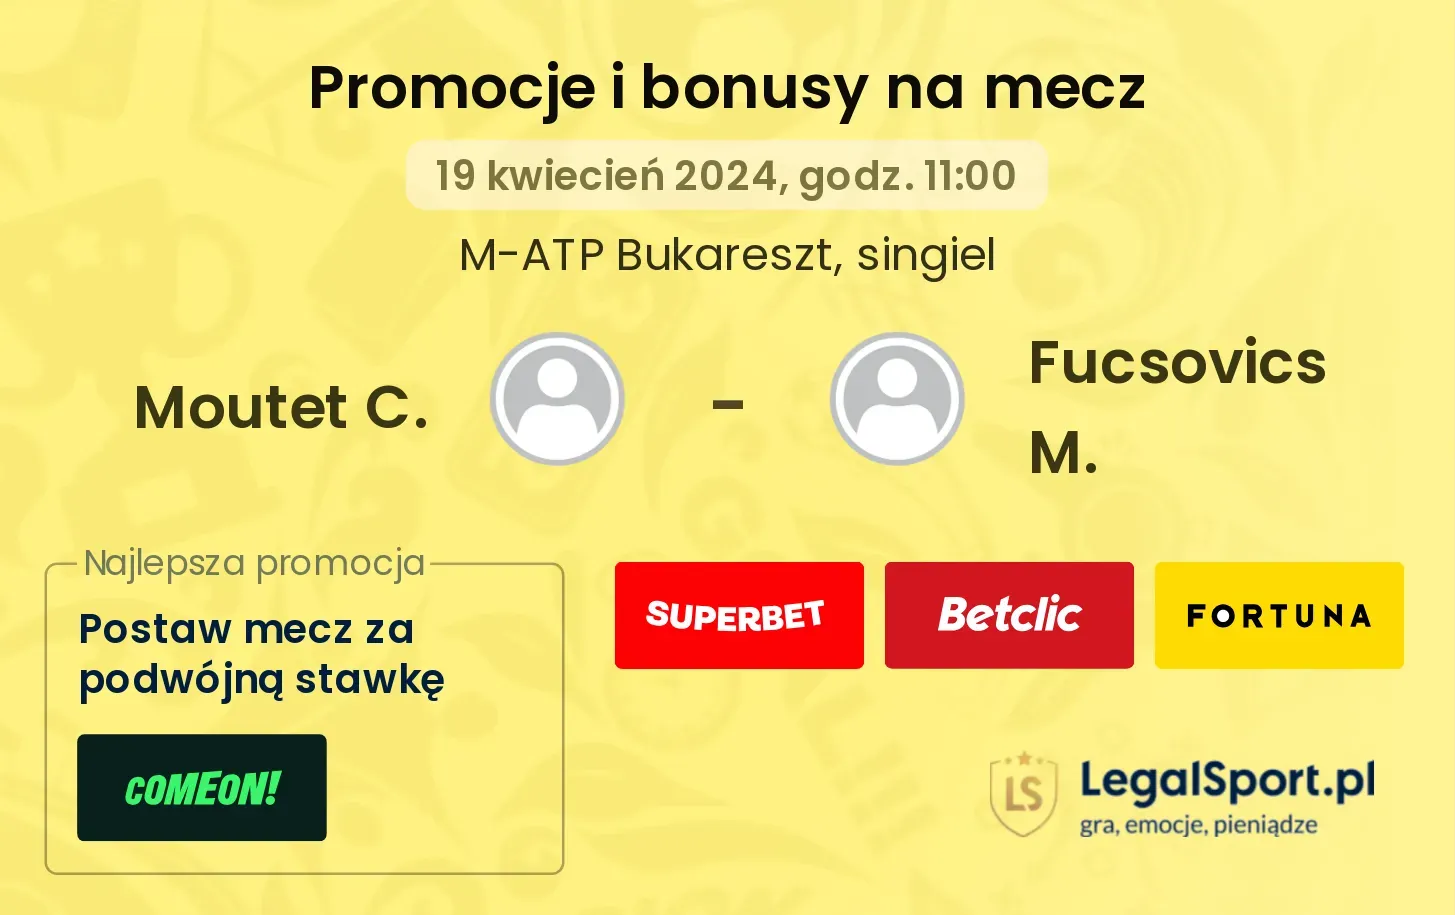 Moutet C. - Fucsovics M. promocje bonusy na mecz